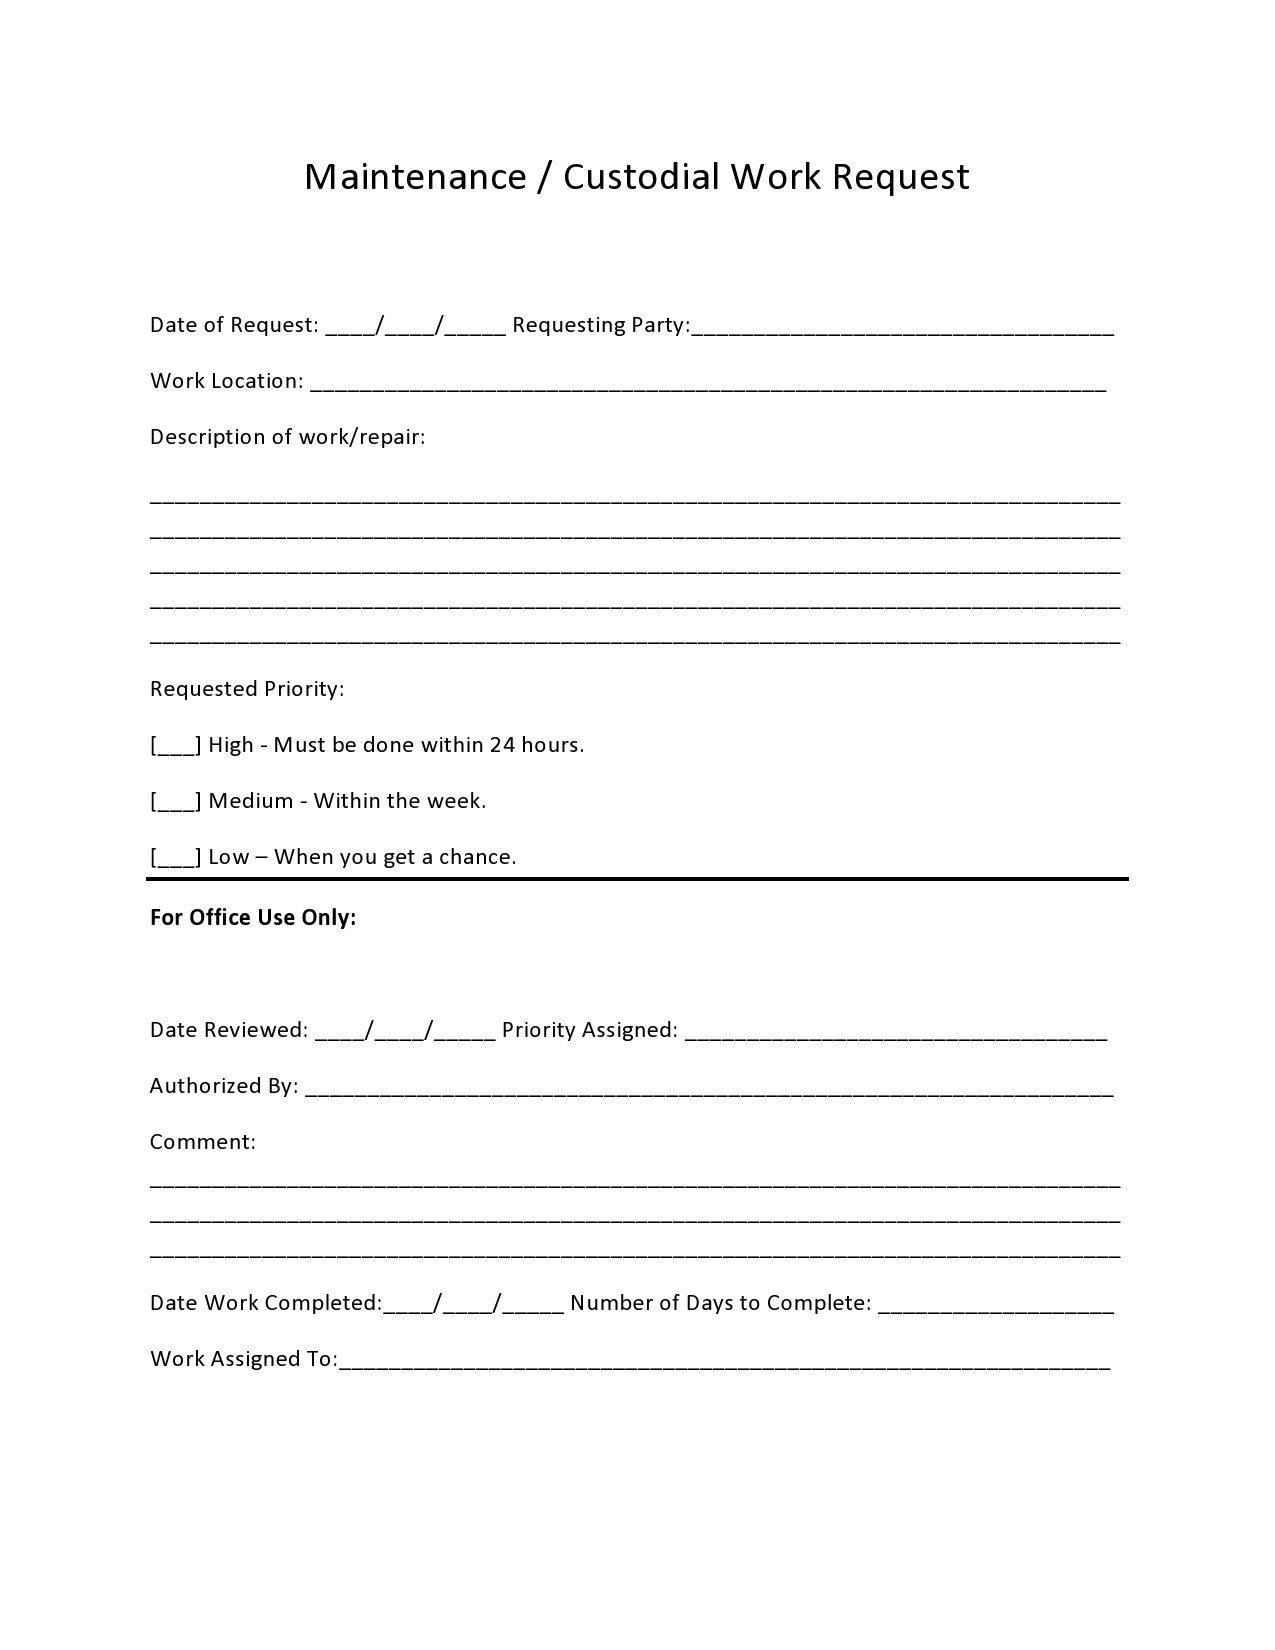 Free maintenance request form 01